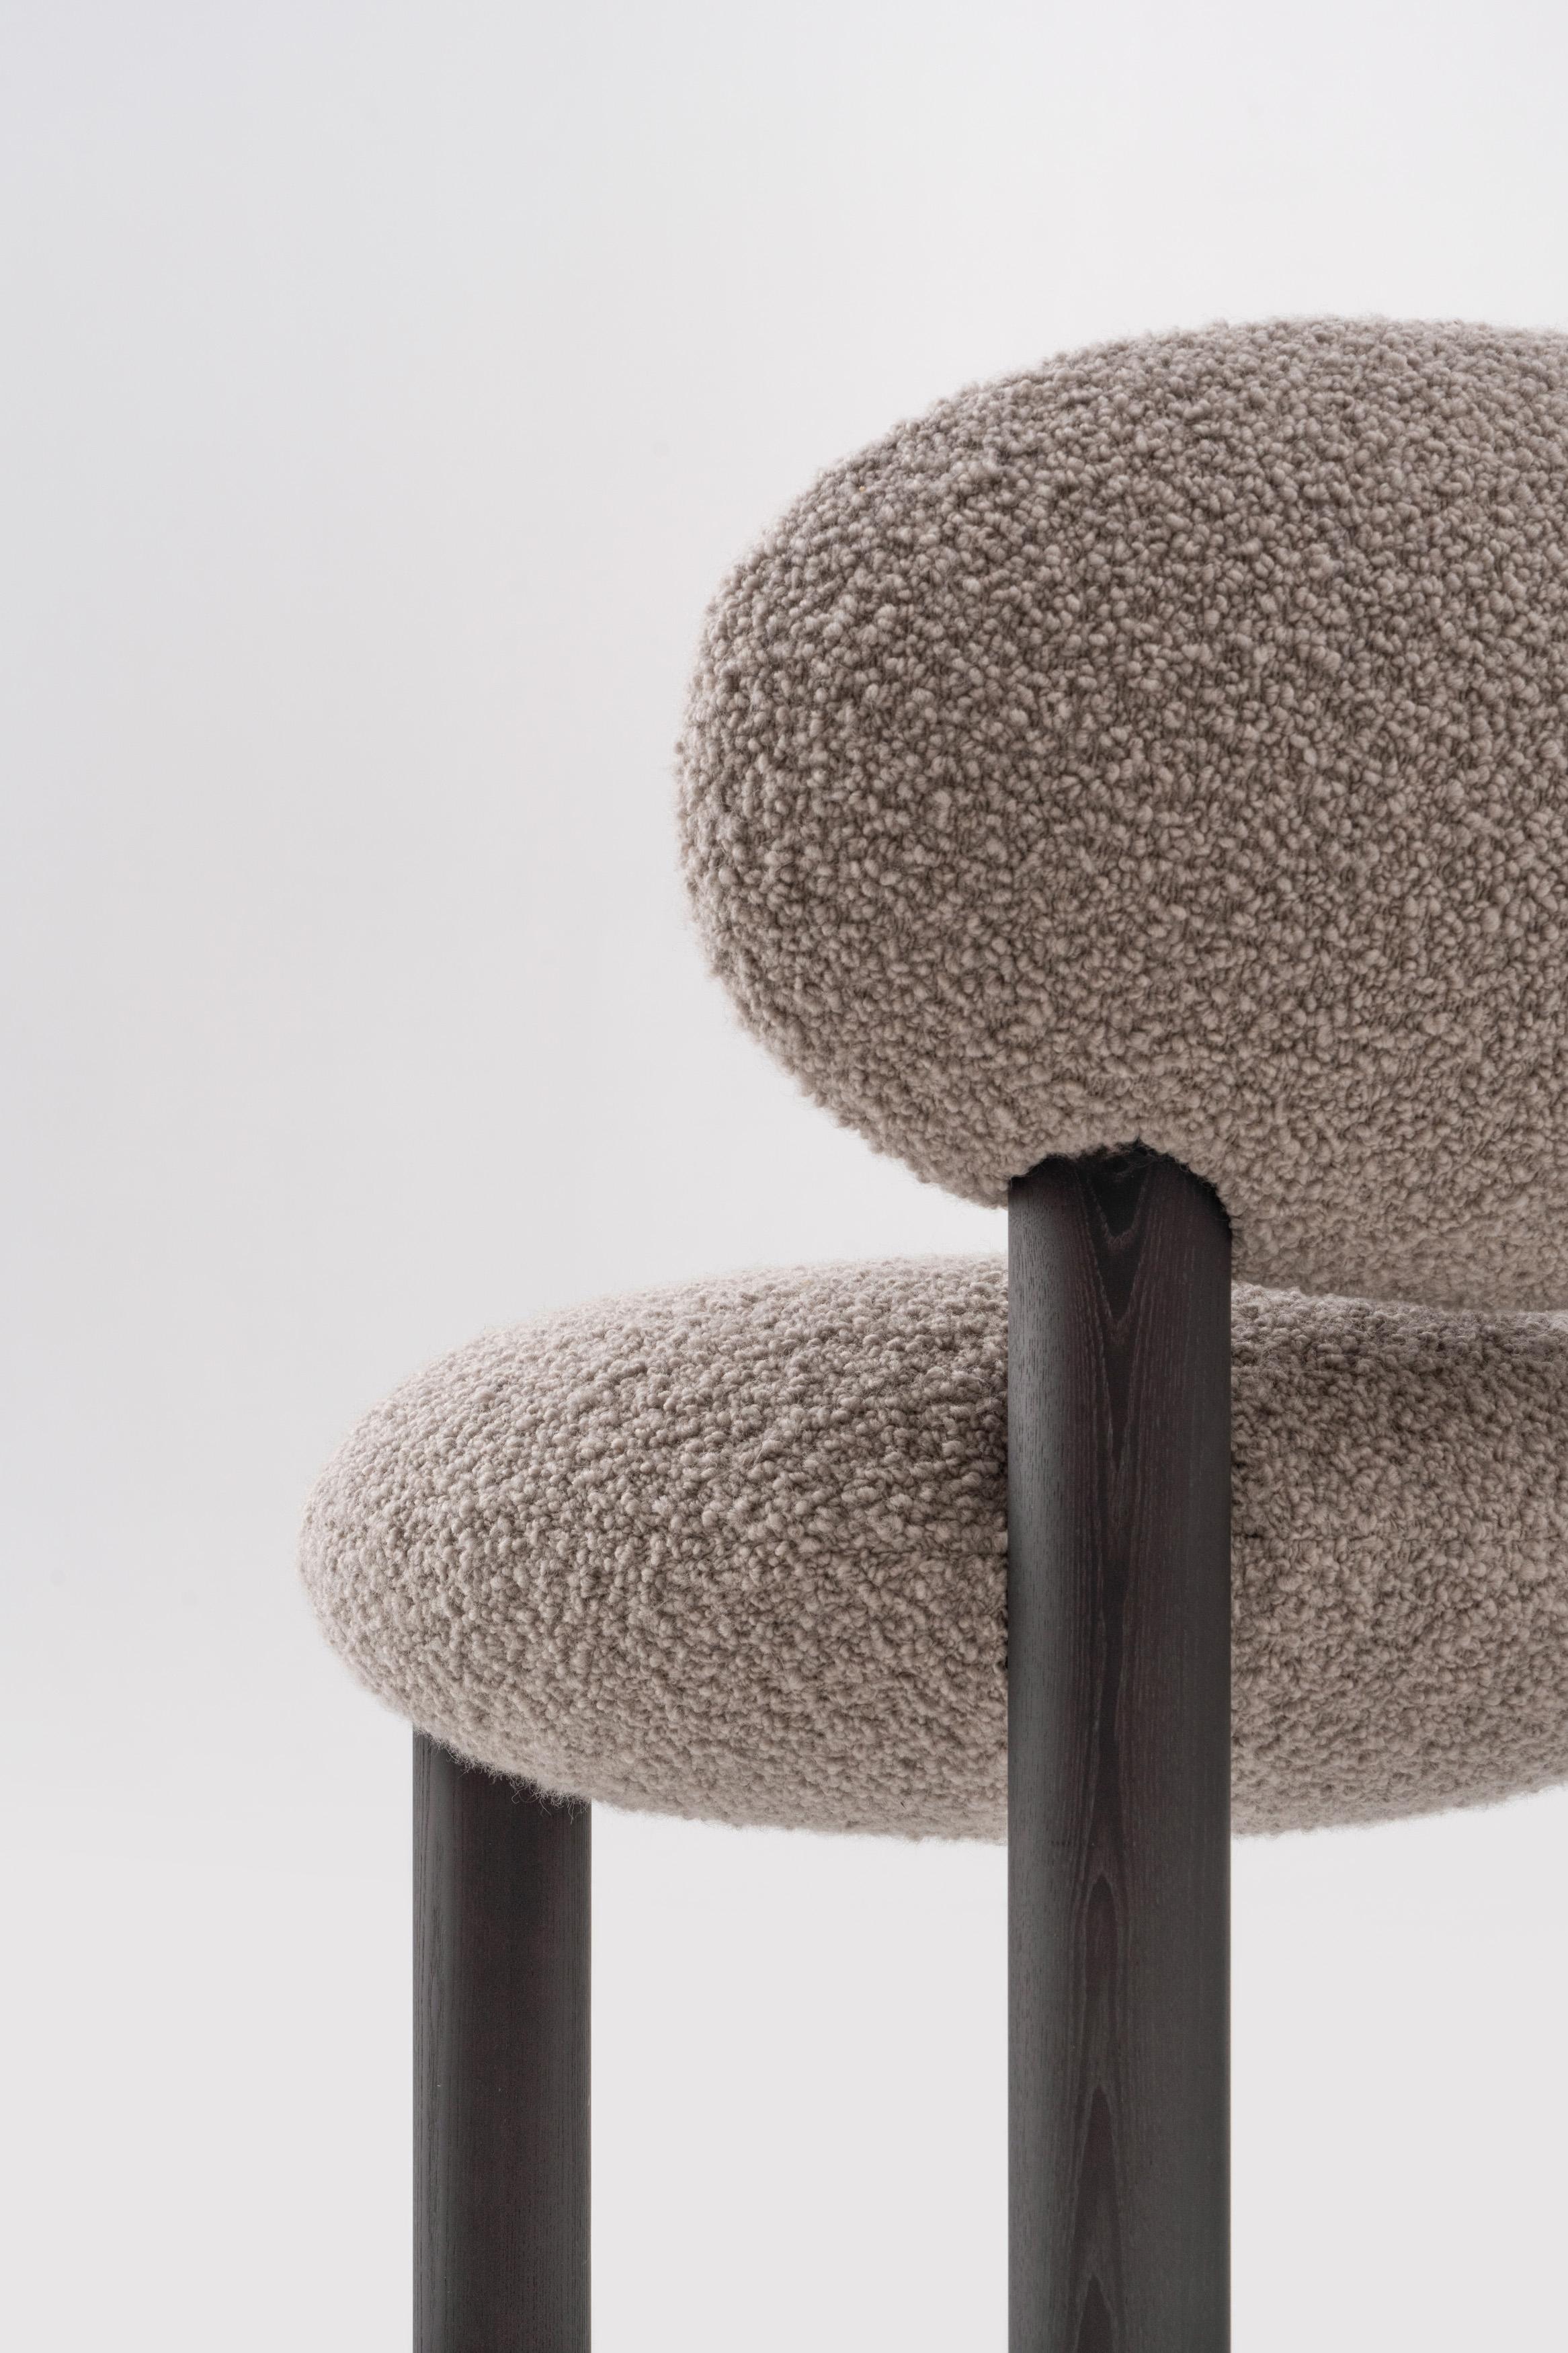 Organic Modern Contemporary Chair 'Flock CS2' by Noom, Black Legs + Nimbus 03 Fabric For Sale